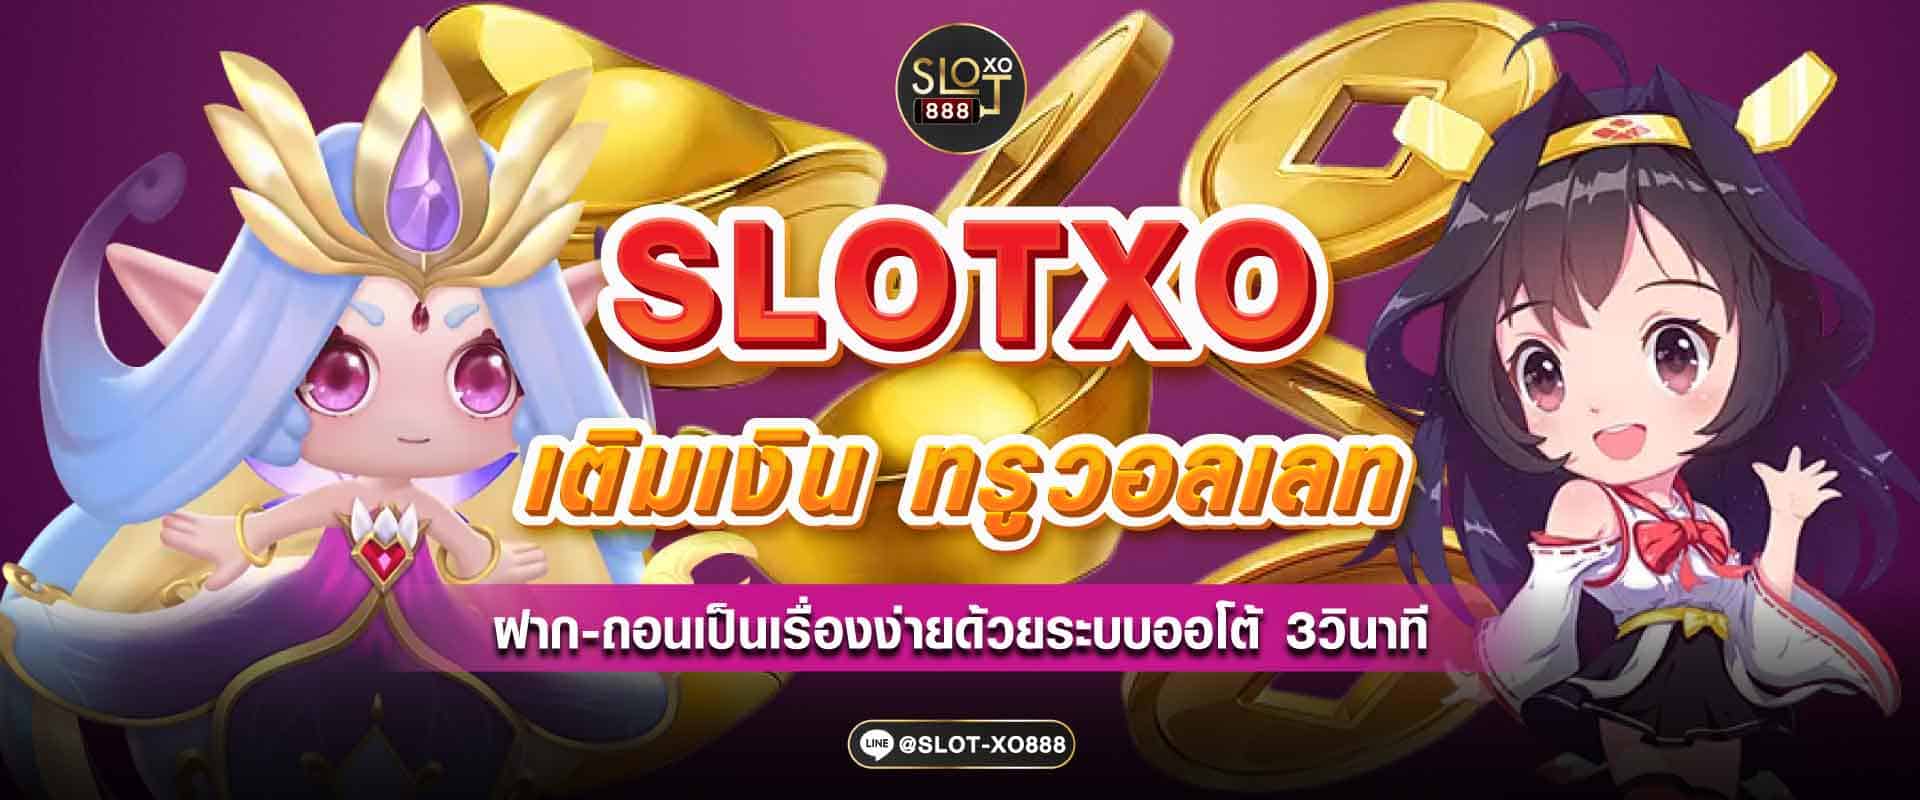 SLOTXO เติมเงิน 2007